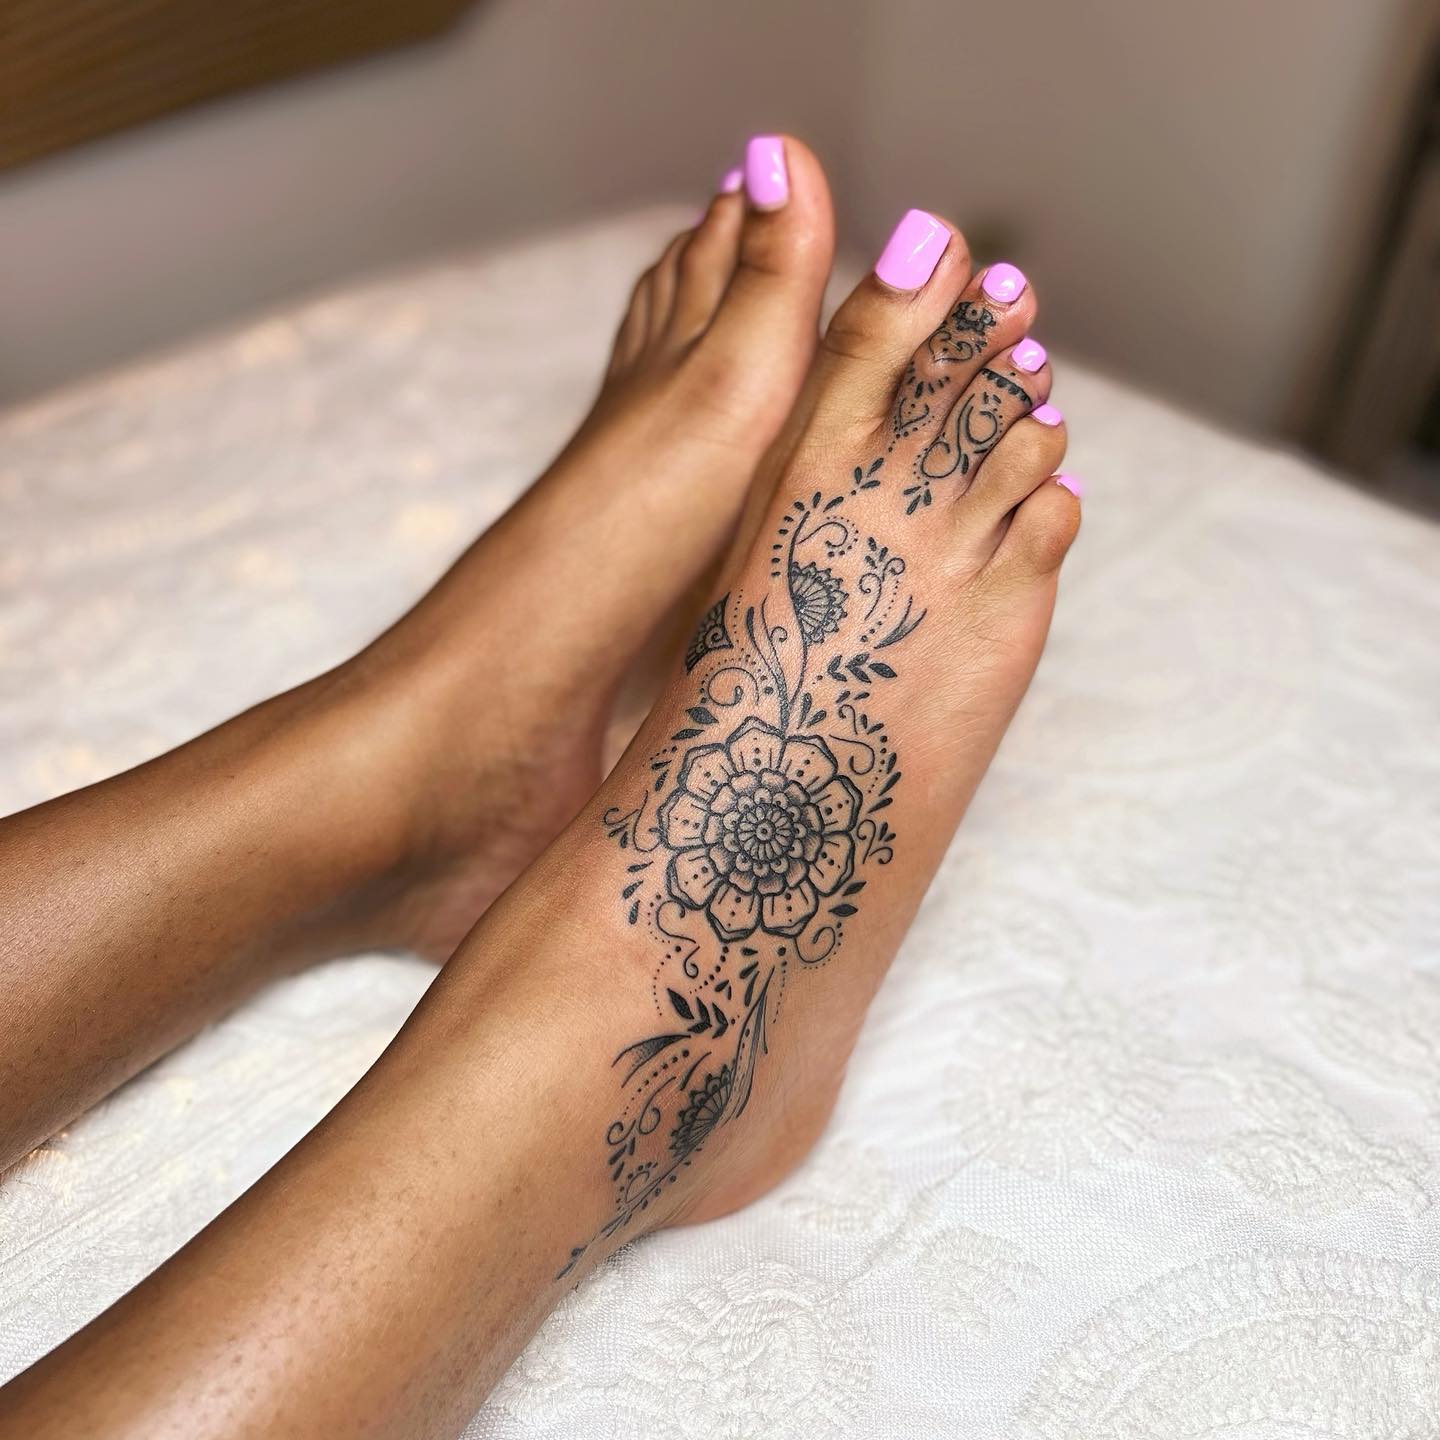 Minimalist daisy tattoo on the ankle